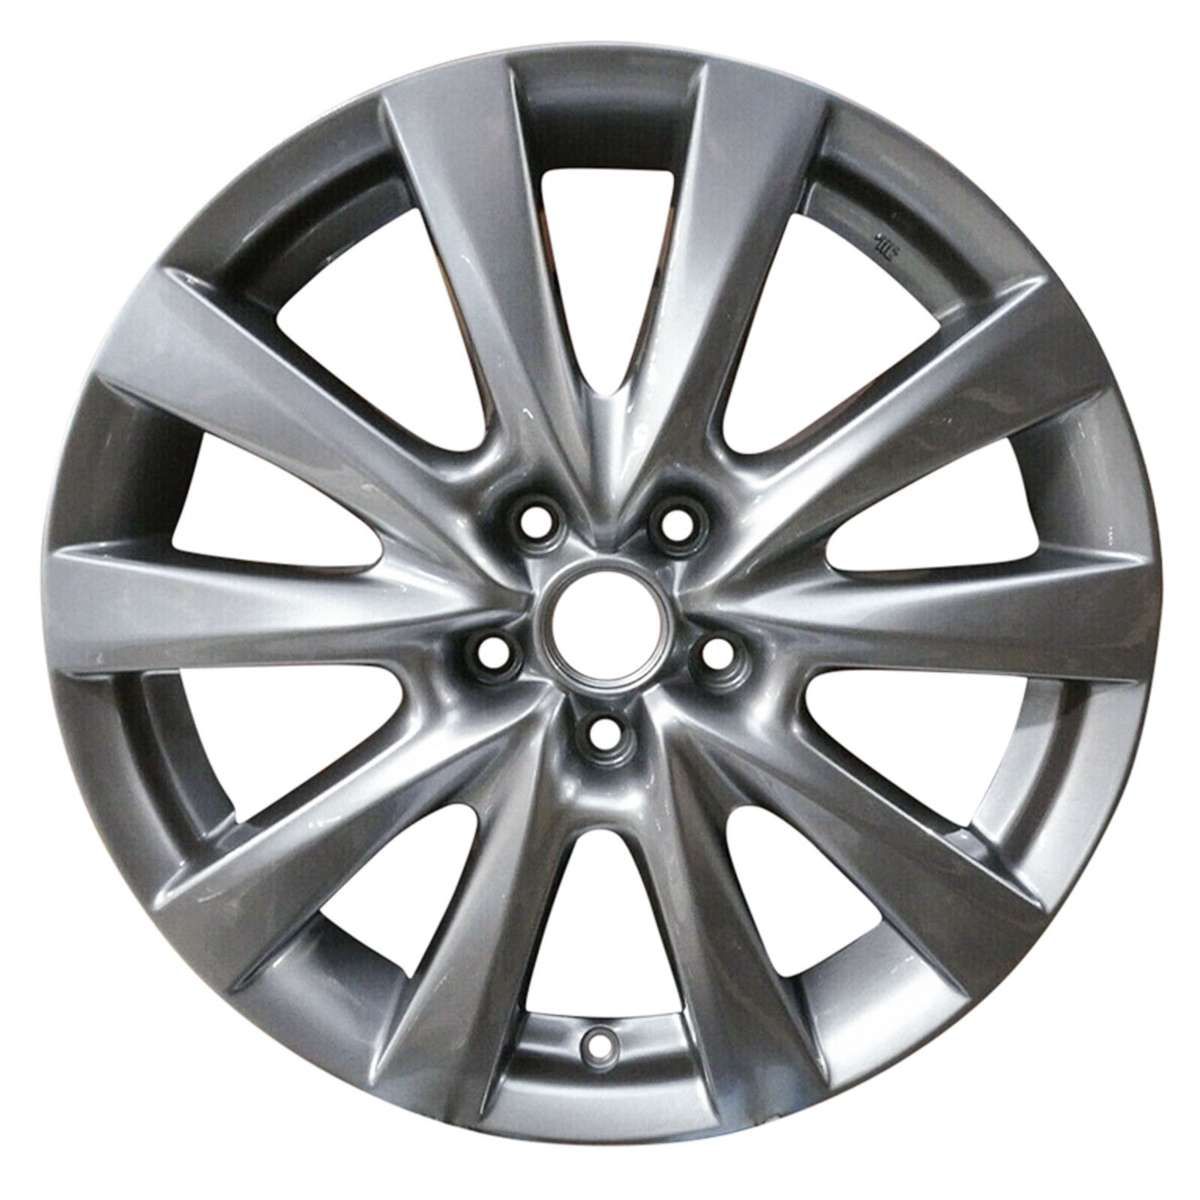 2019 Mazda 3 New 18" Replacement Wheel Rim RW64974C